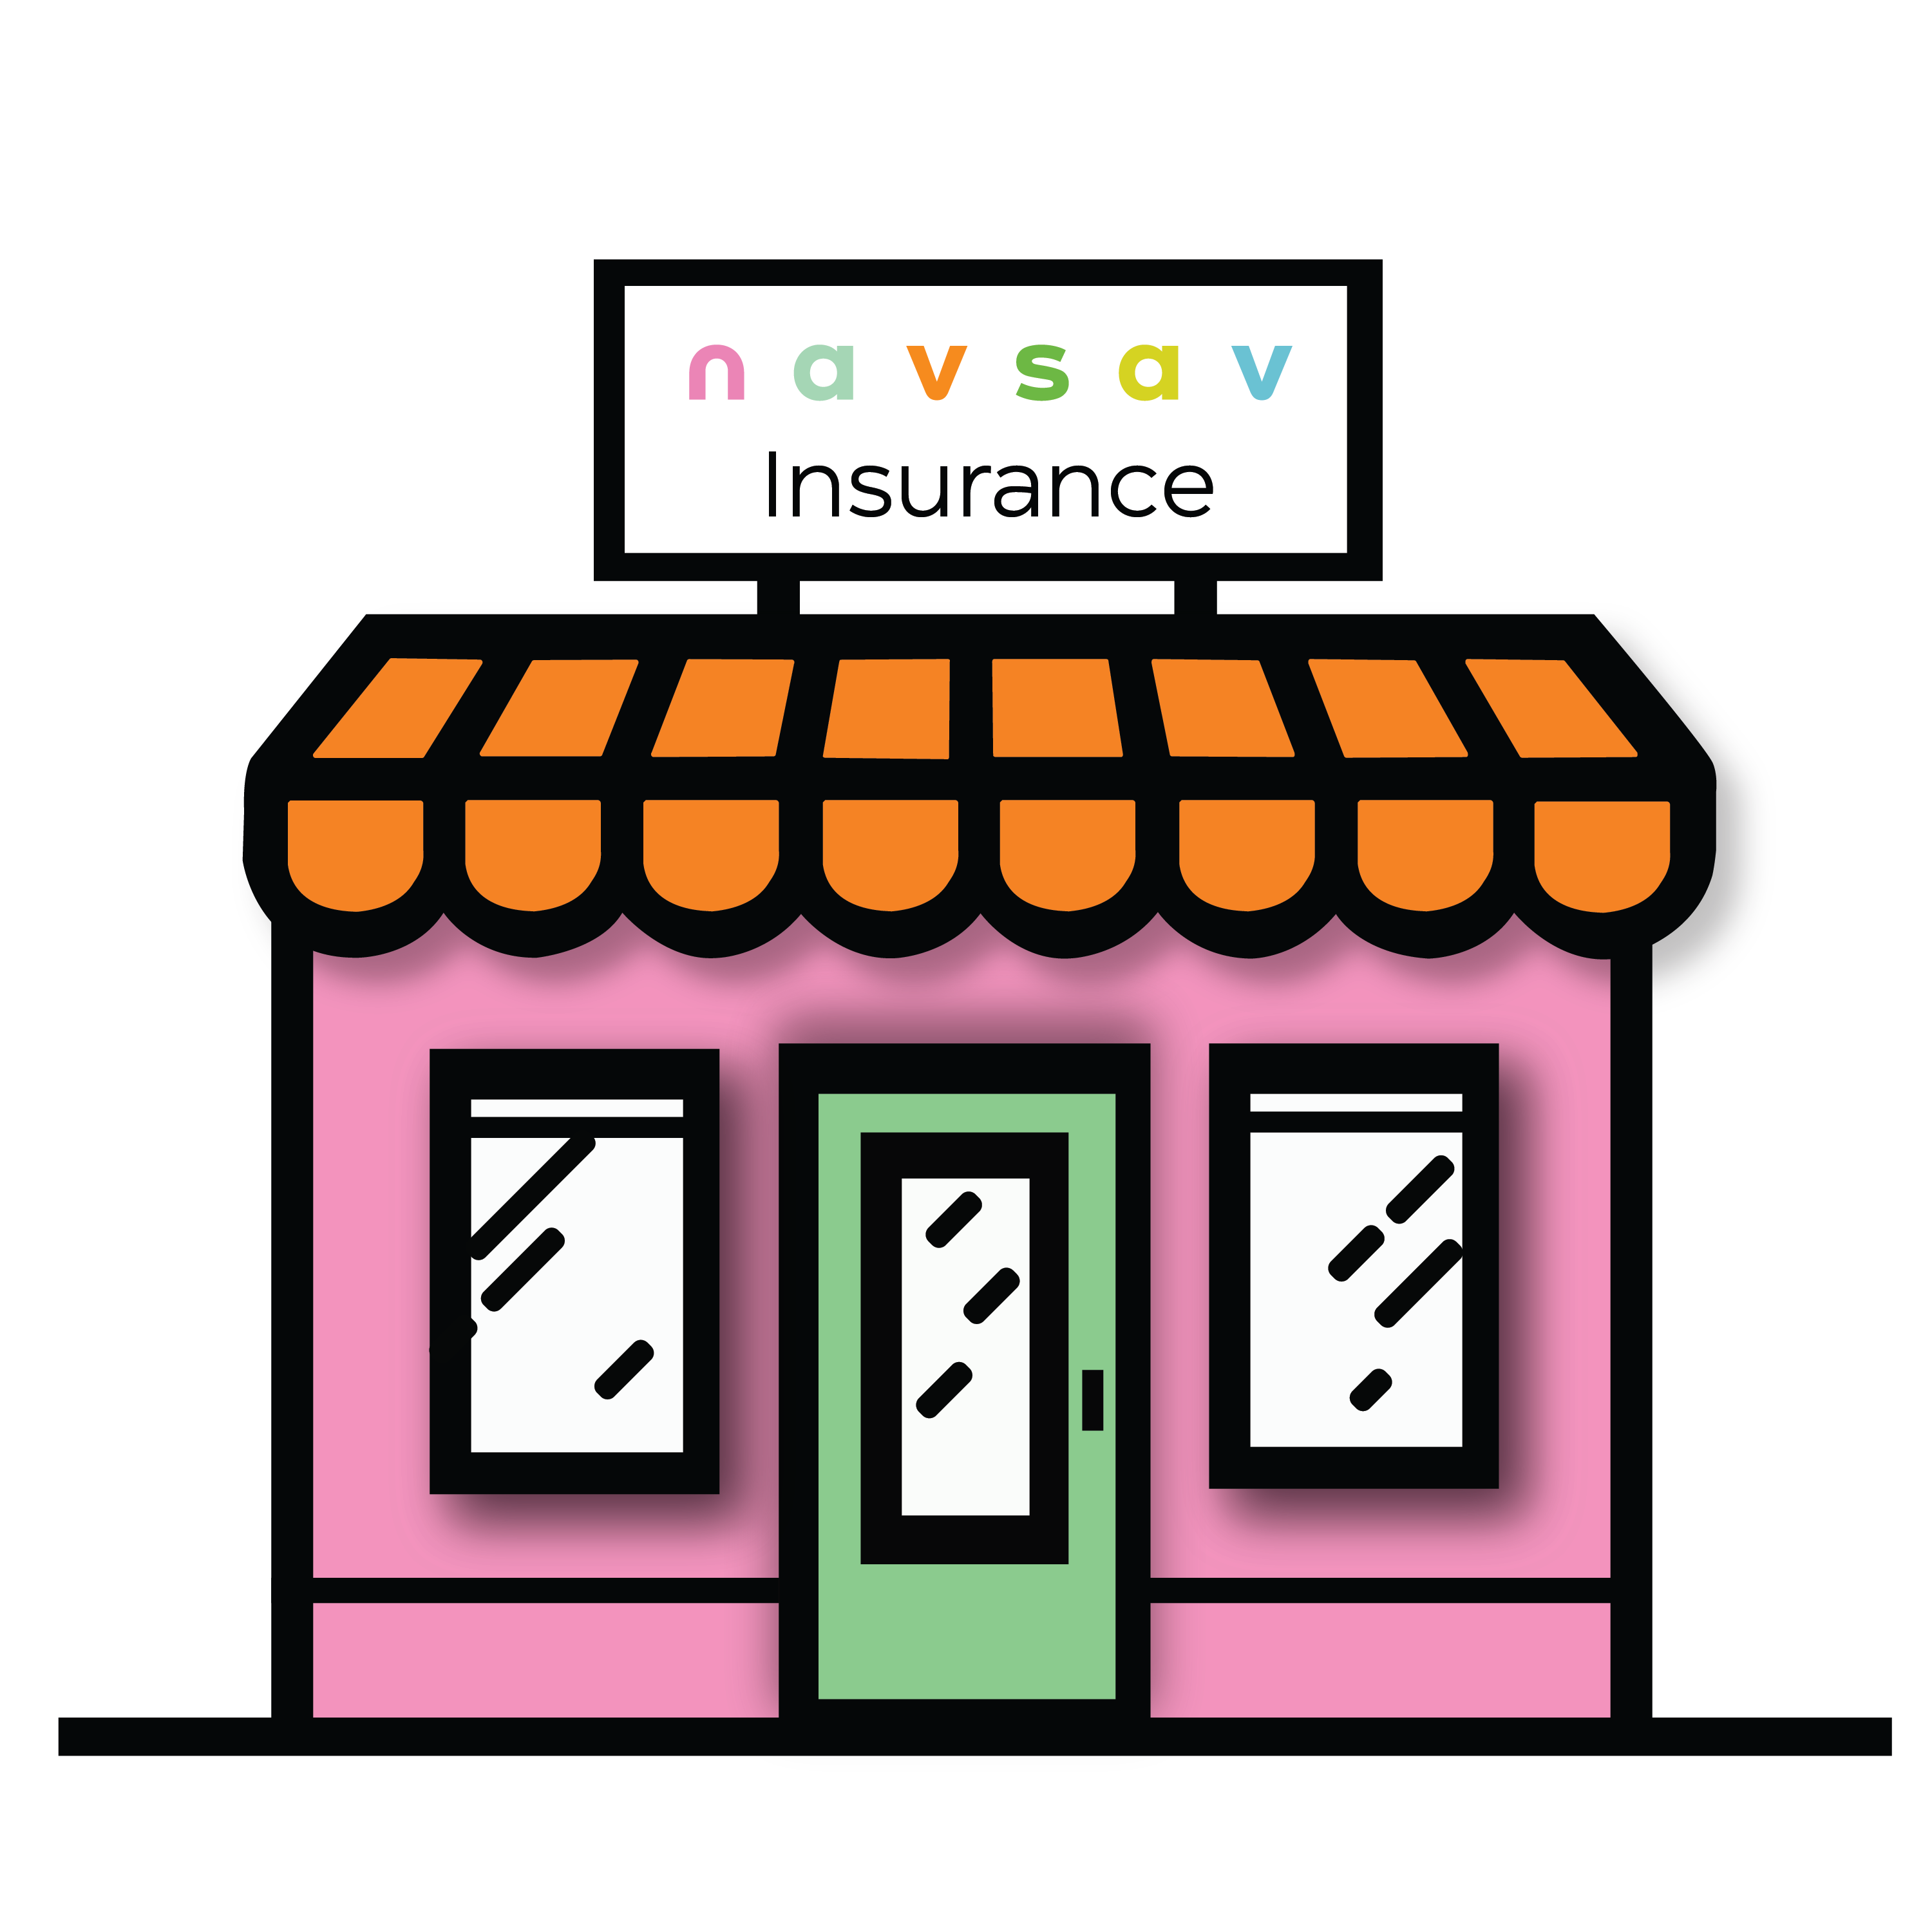 NavSav Insurance - Woodlands Houston (281)488-2733